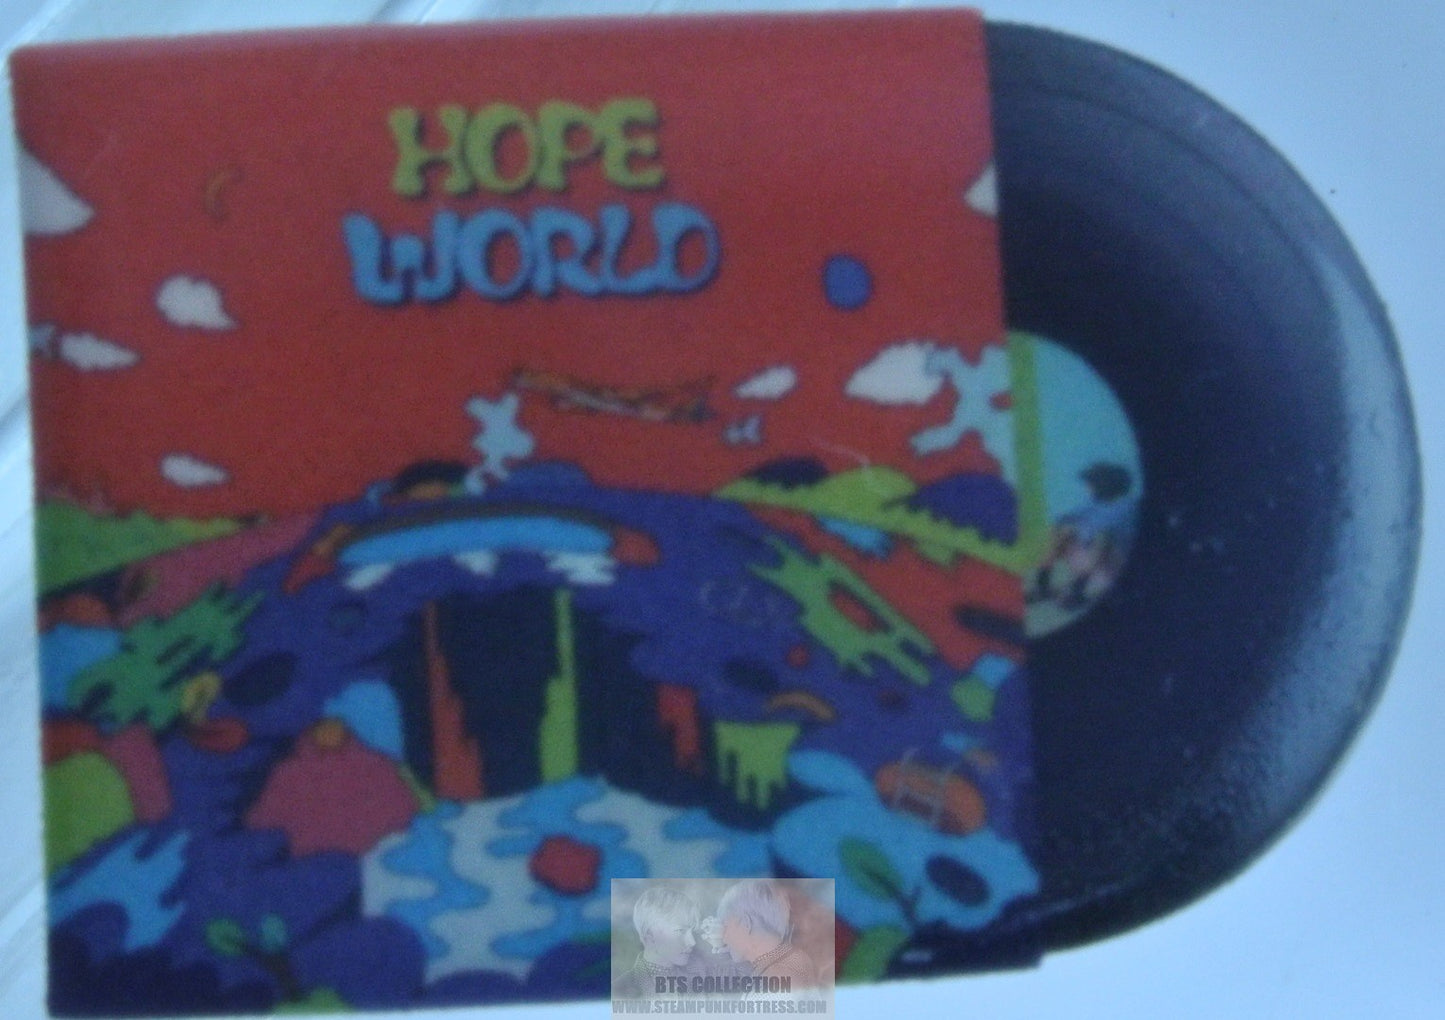 BTS ACRYLIC PIN JUNG HOSEOK J-HOPE HOPE WORLD VINYL RECORD BADGE BUTTON